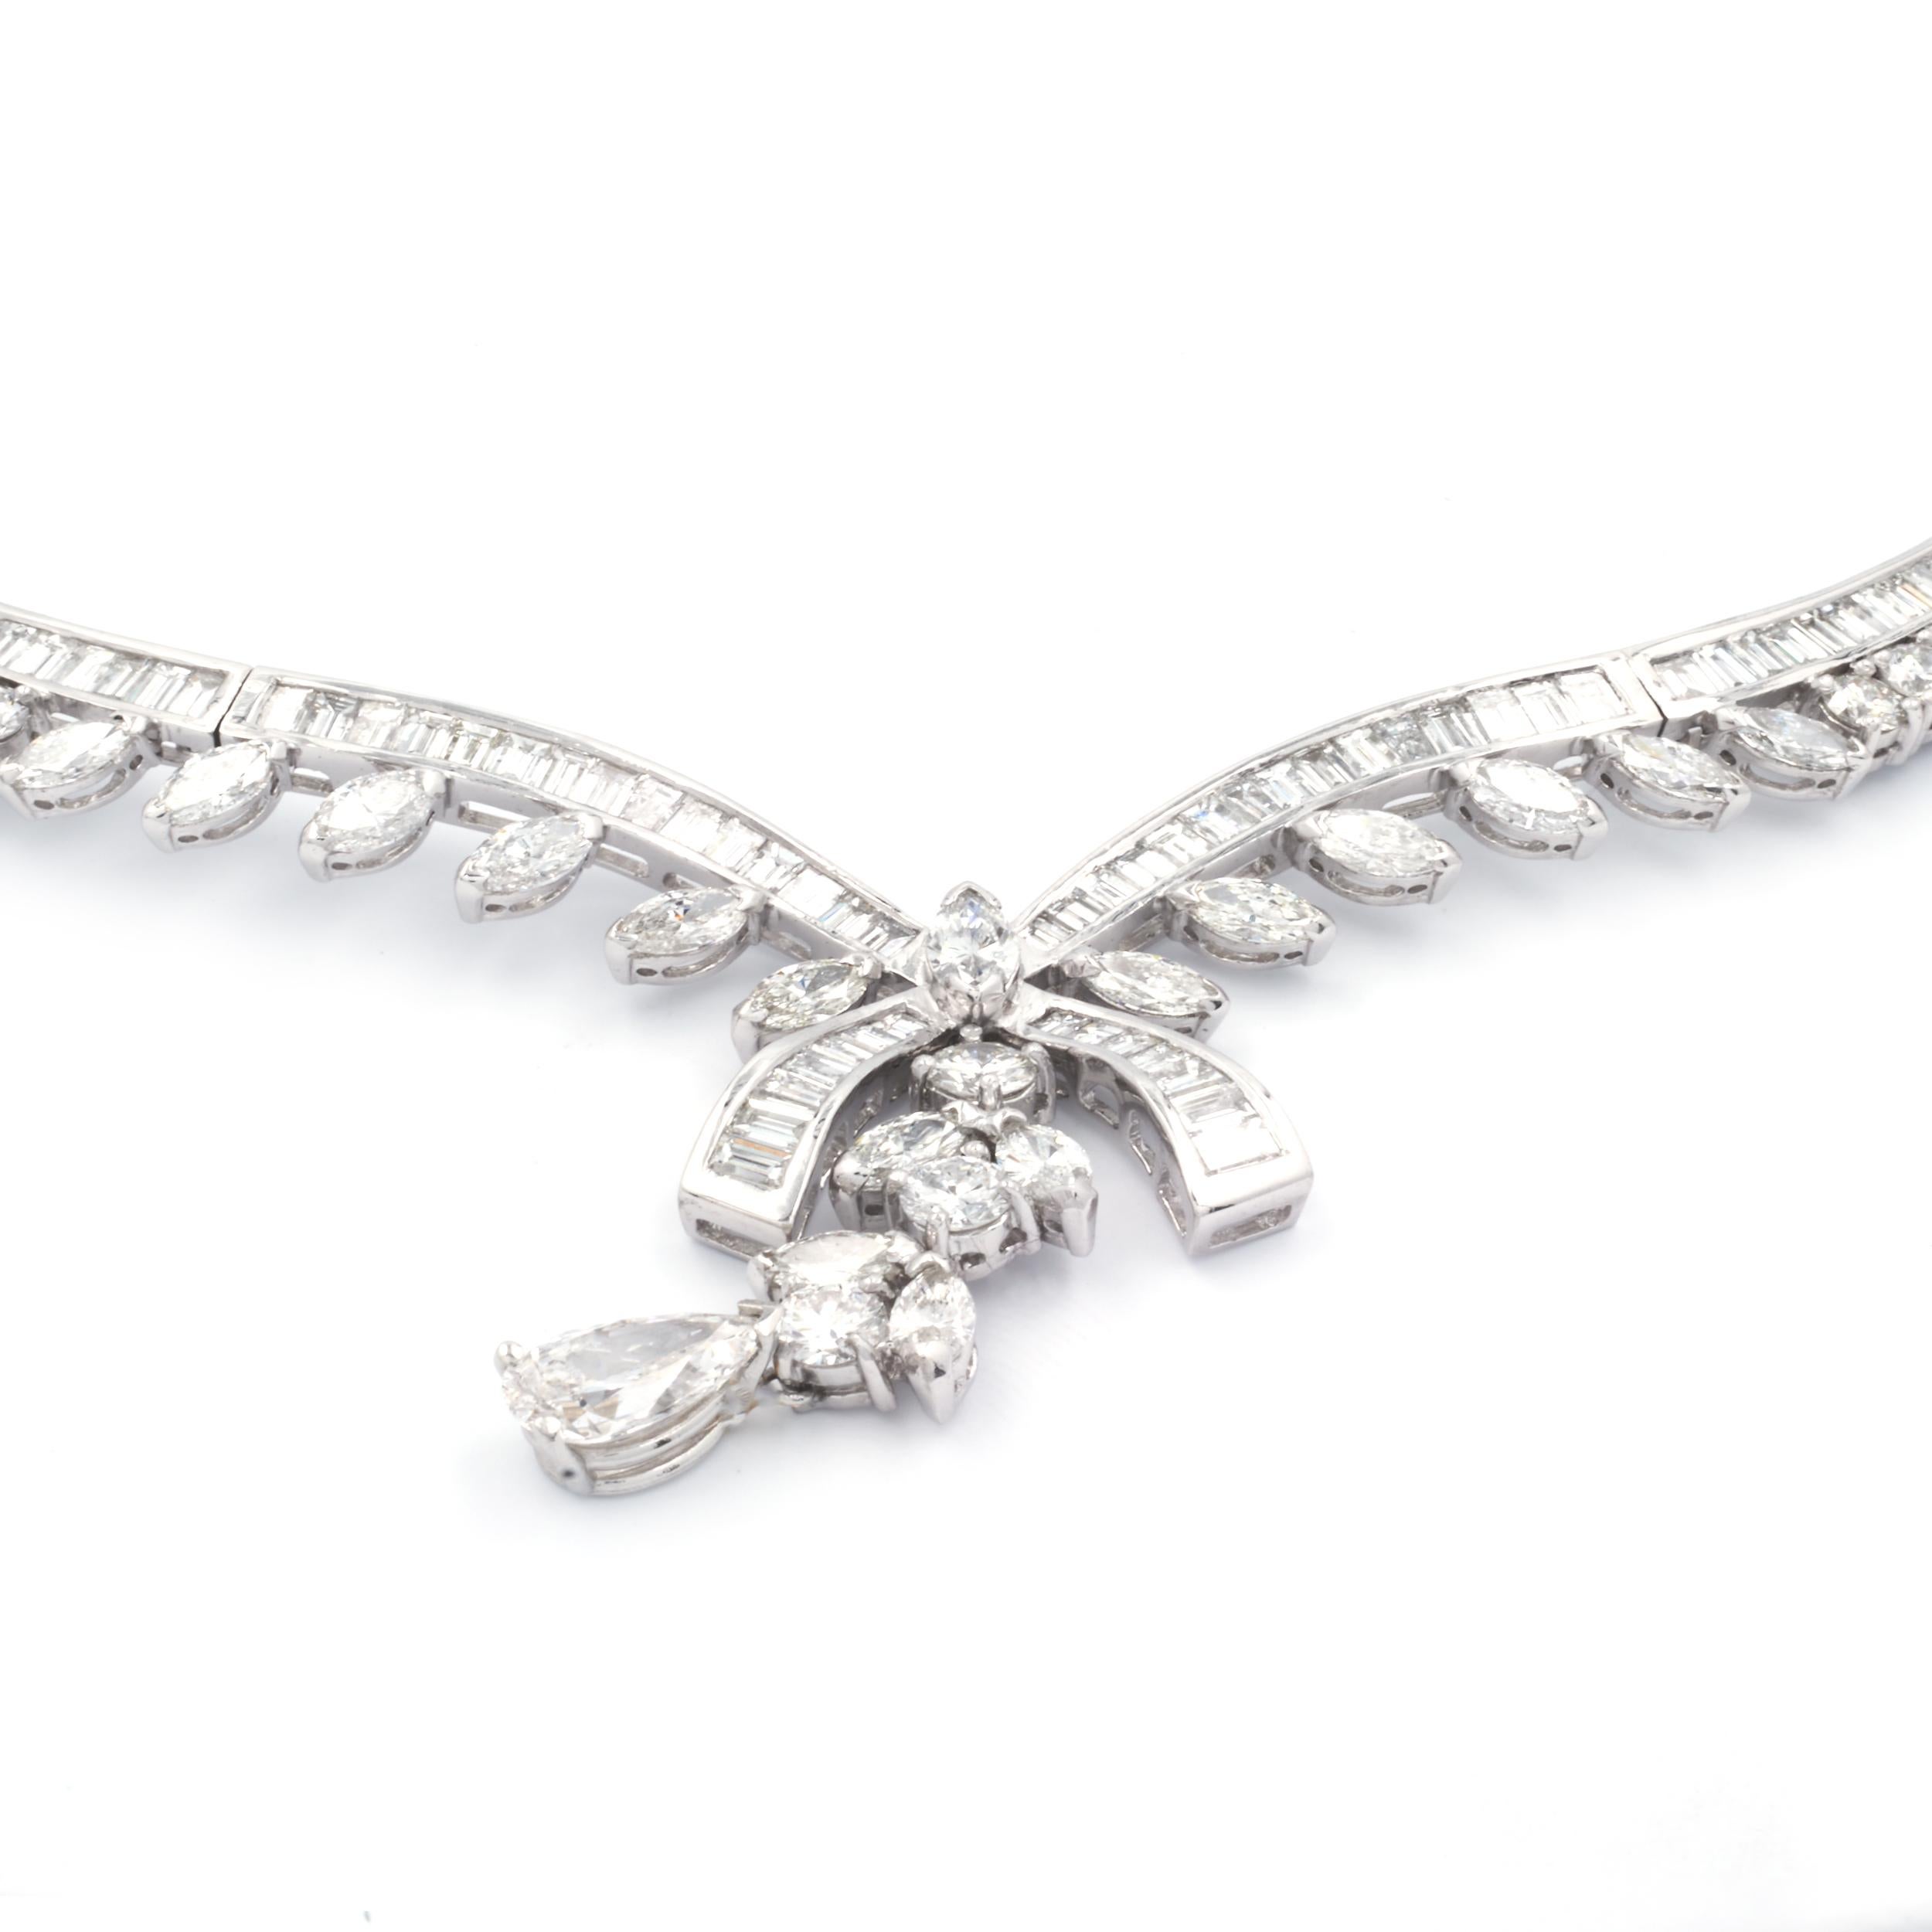 Baguette Cut Platinum Ornate Diamond Collar Necklace with Diamond Bow Drop